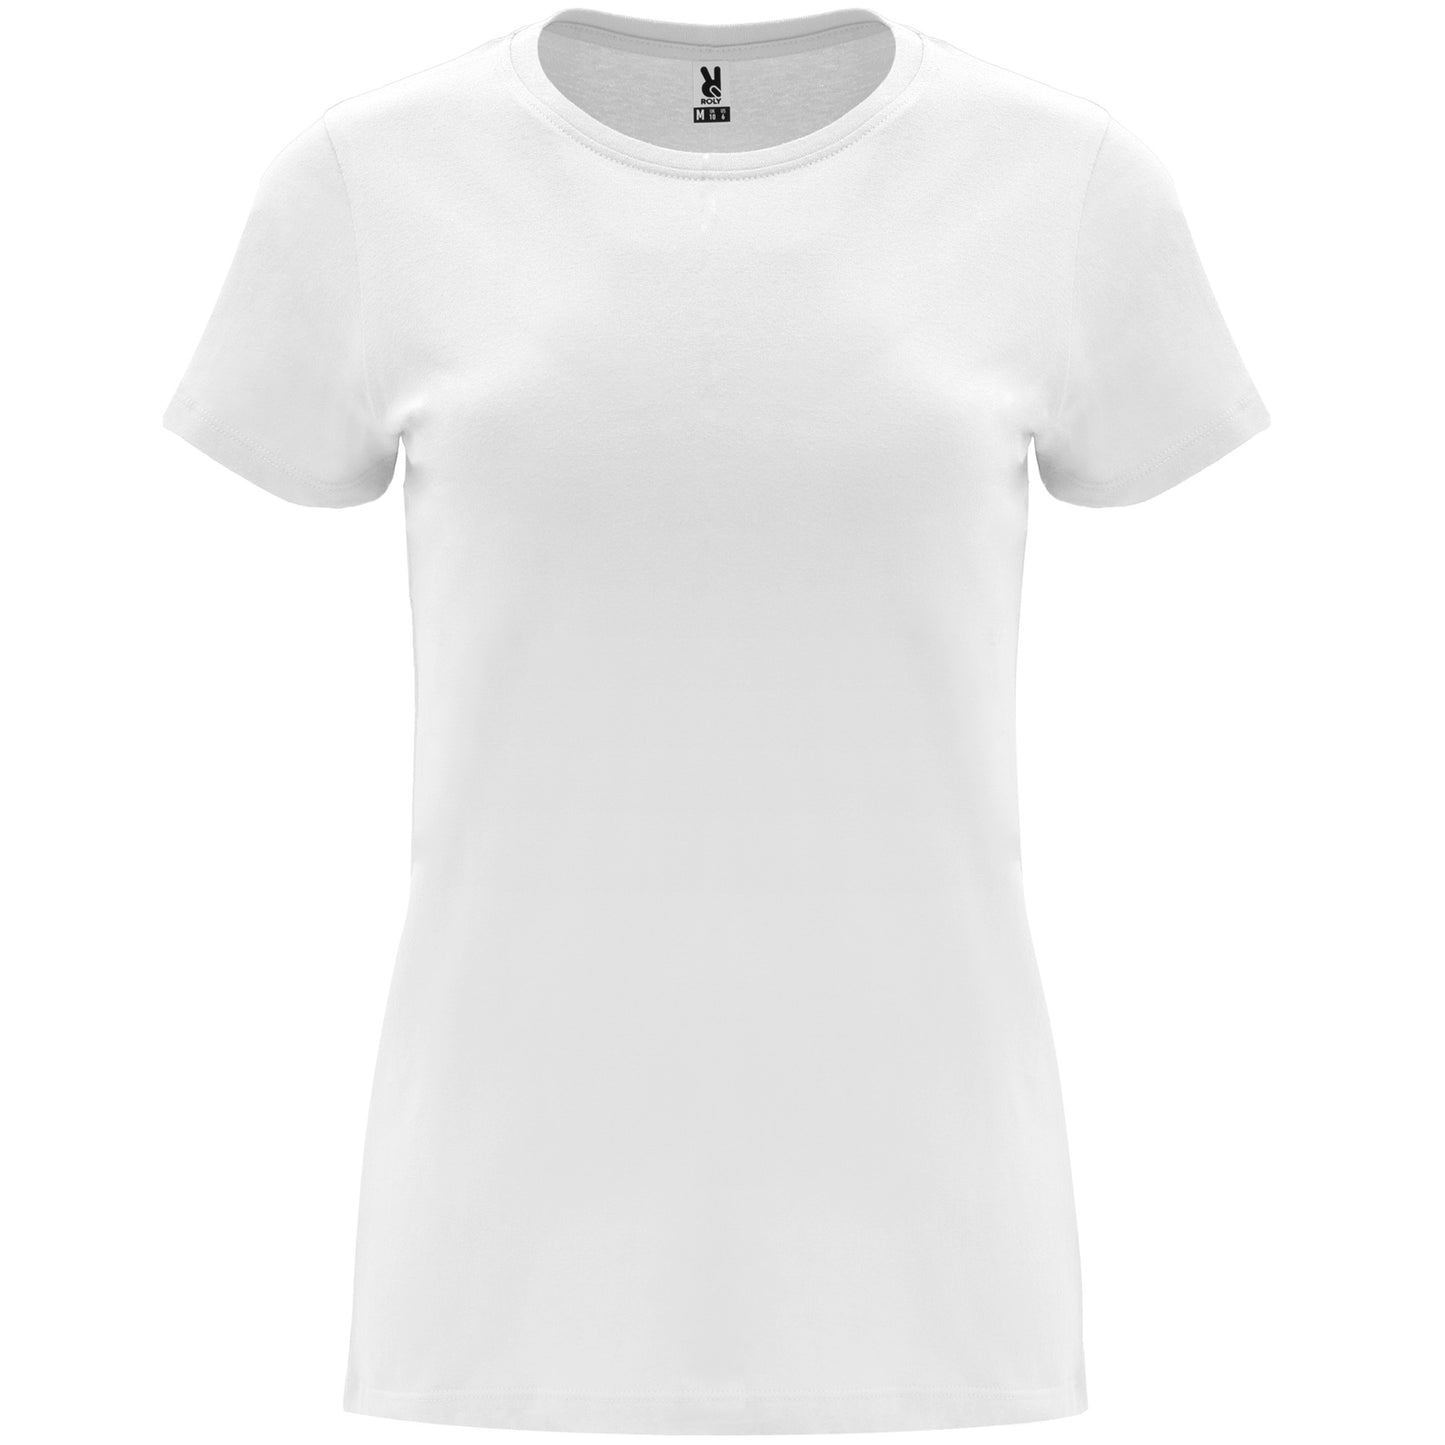 T-shirt donna manica corta toni chiari